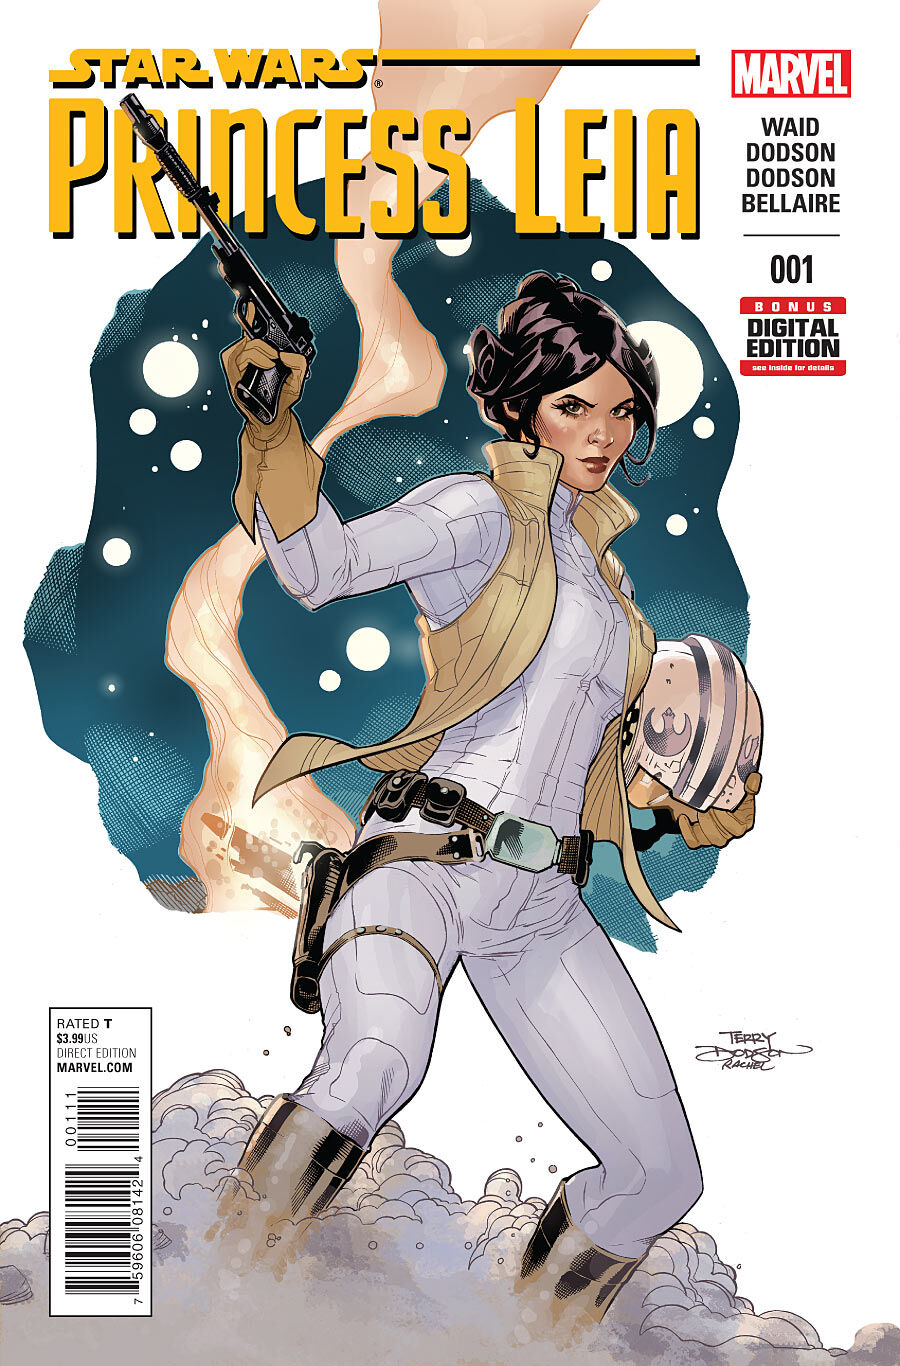 Star Wars: Princess Leia Limited Series Bundle Issues 1-5